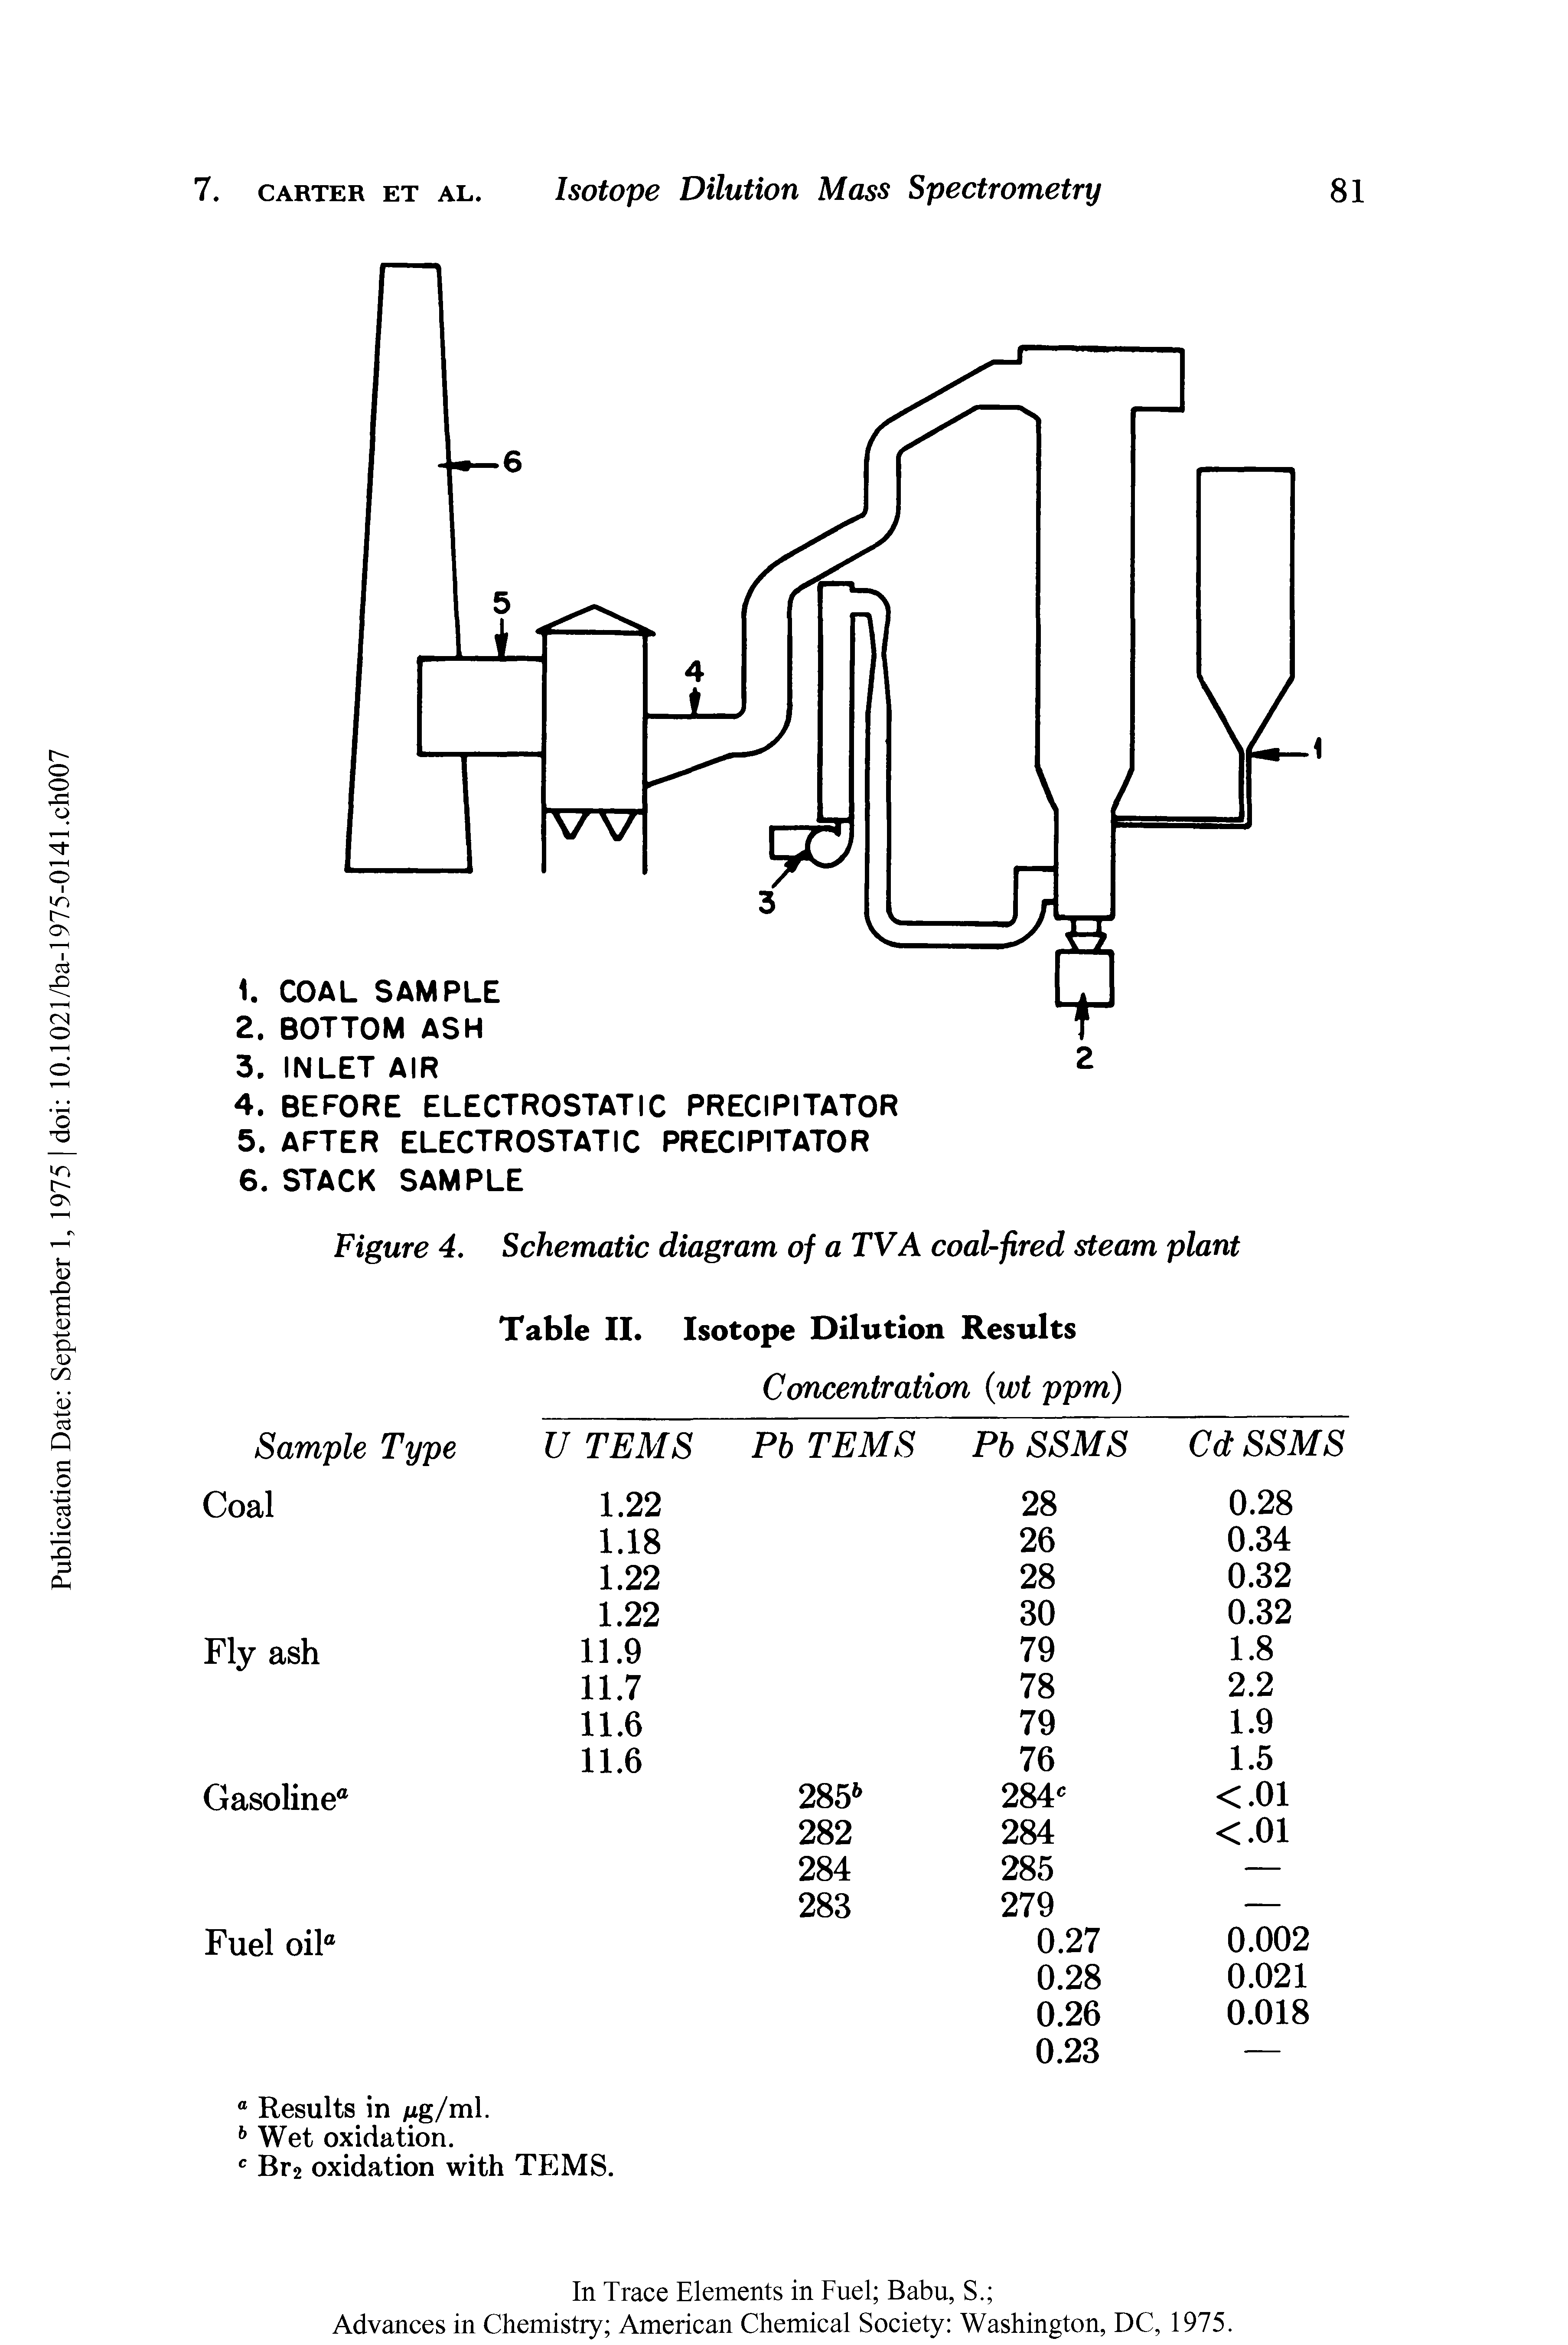 Figure 4. Schematic diagram of a TV A coal-fired steam plant...